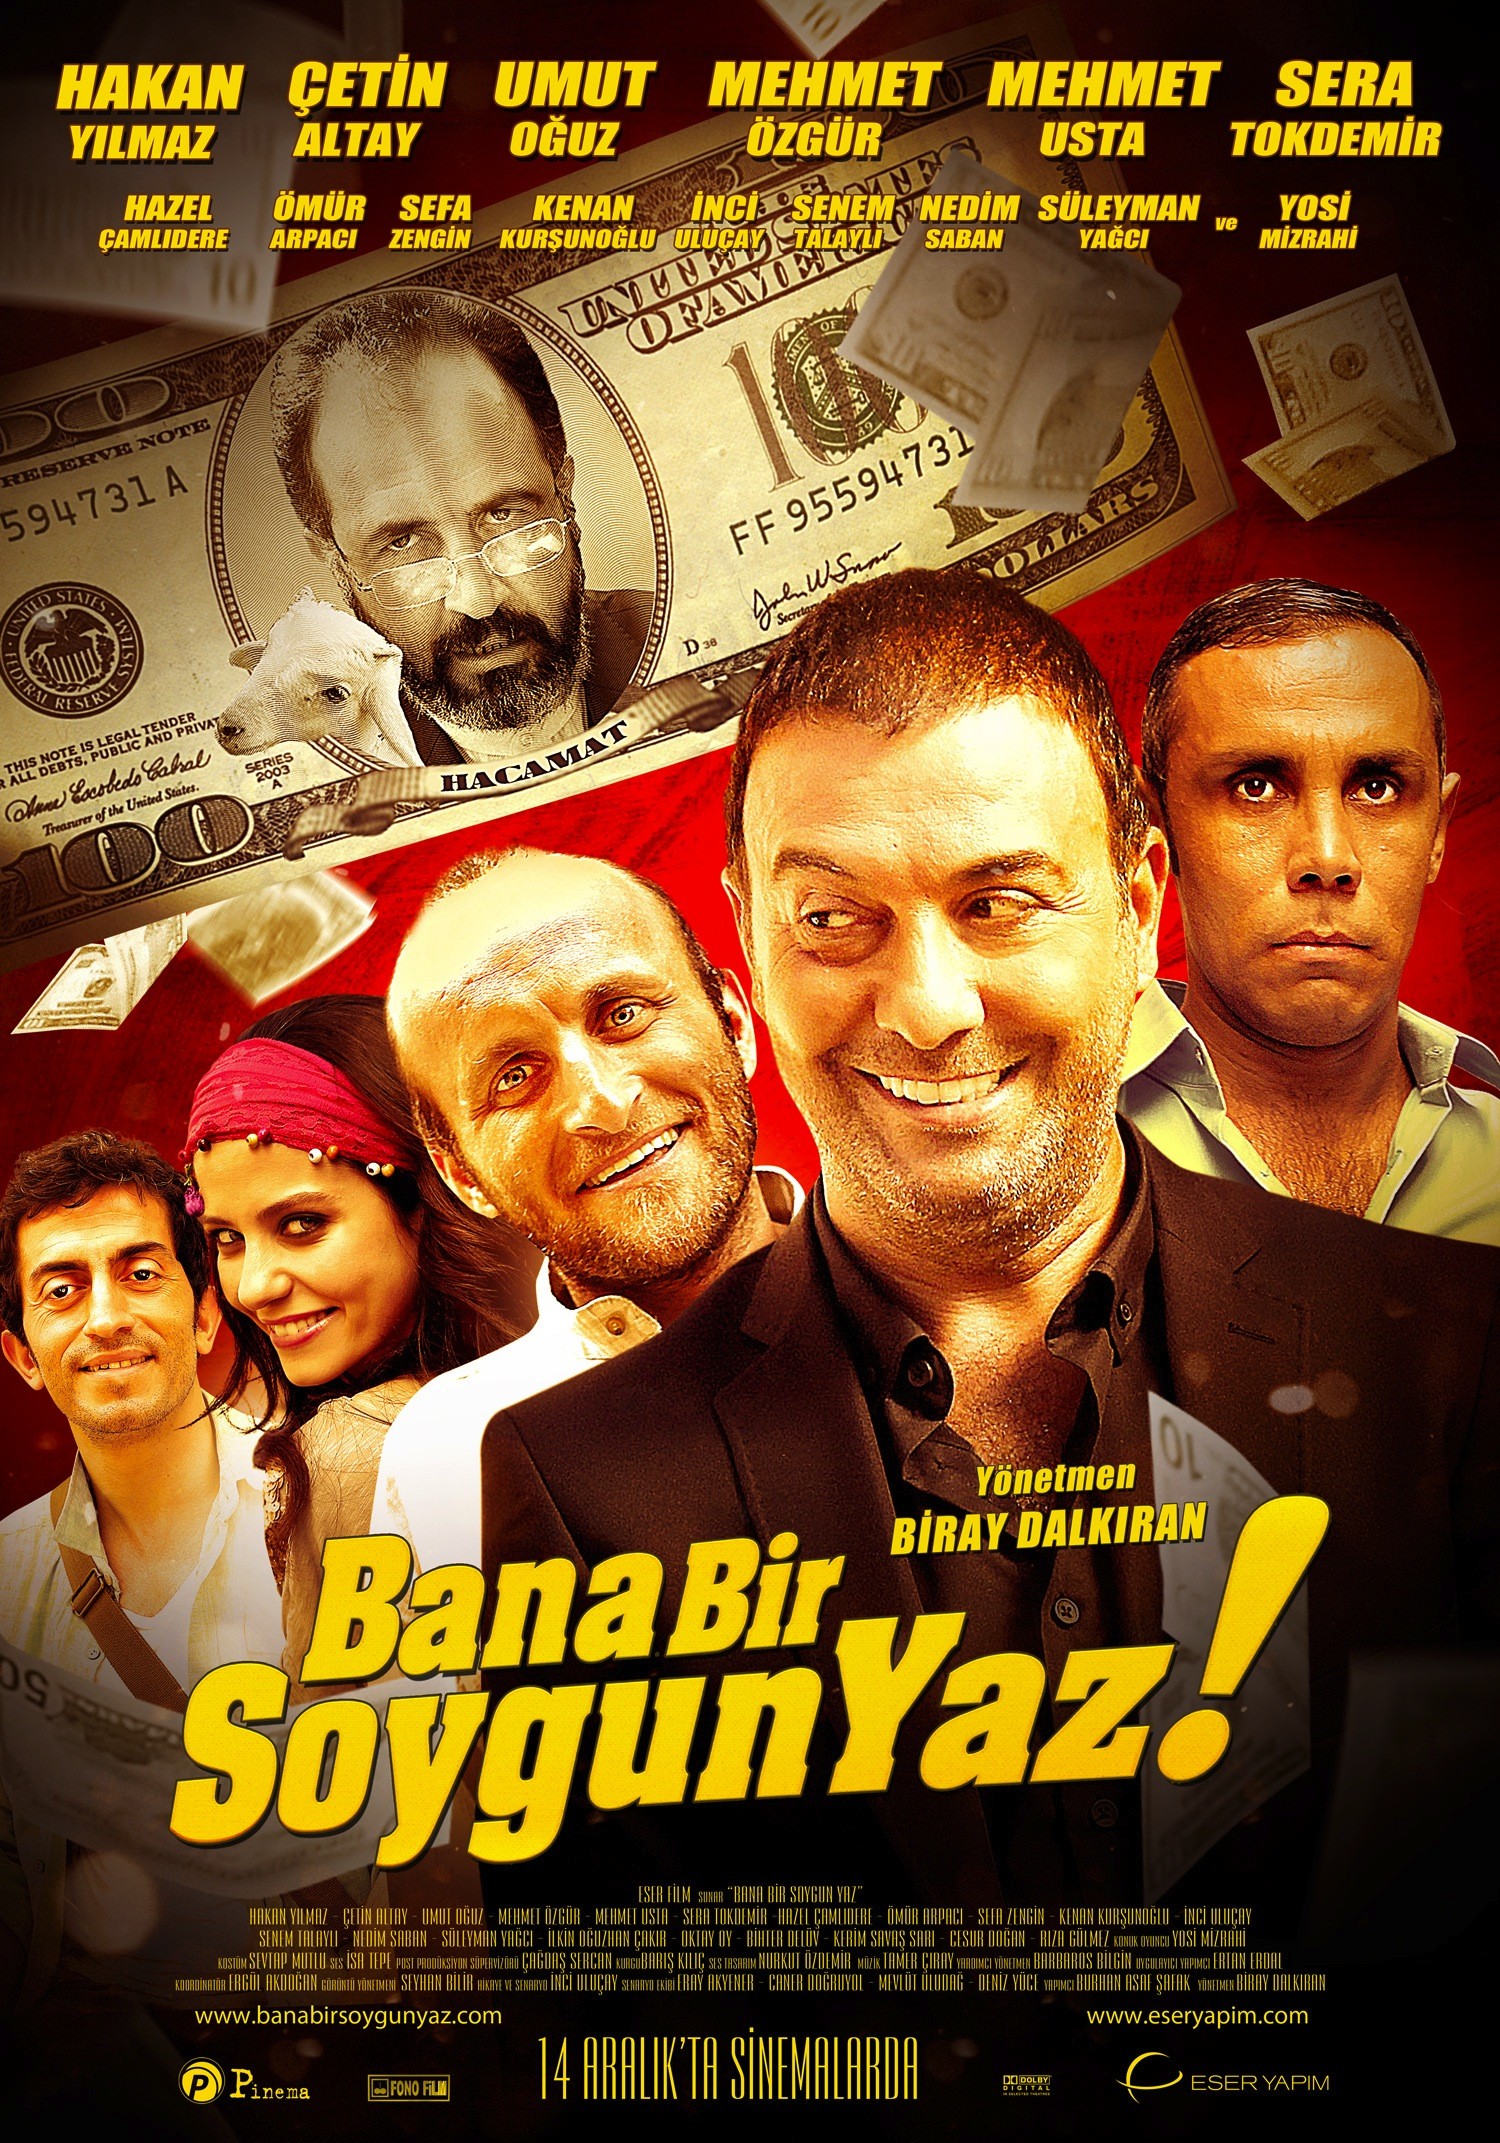 Mega Sized Movie Poster Image for Bana Bir Soygun Yaz 